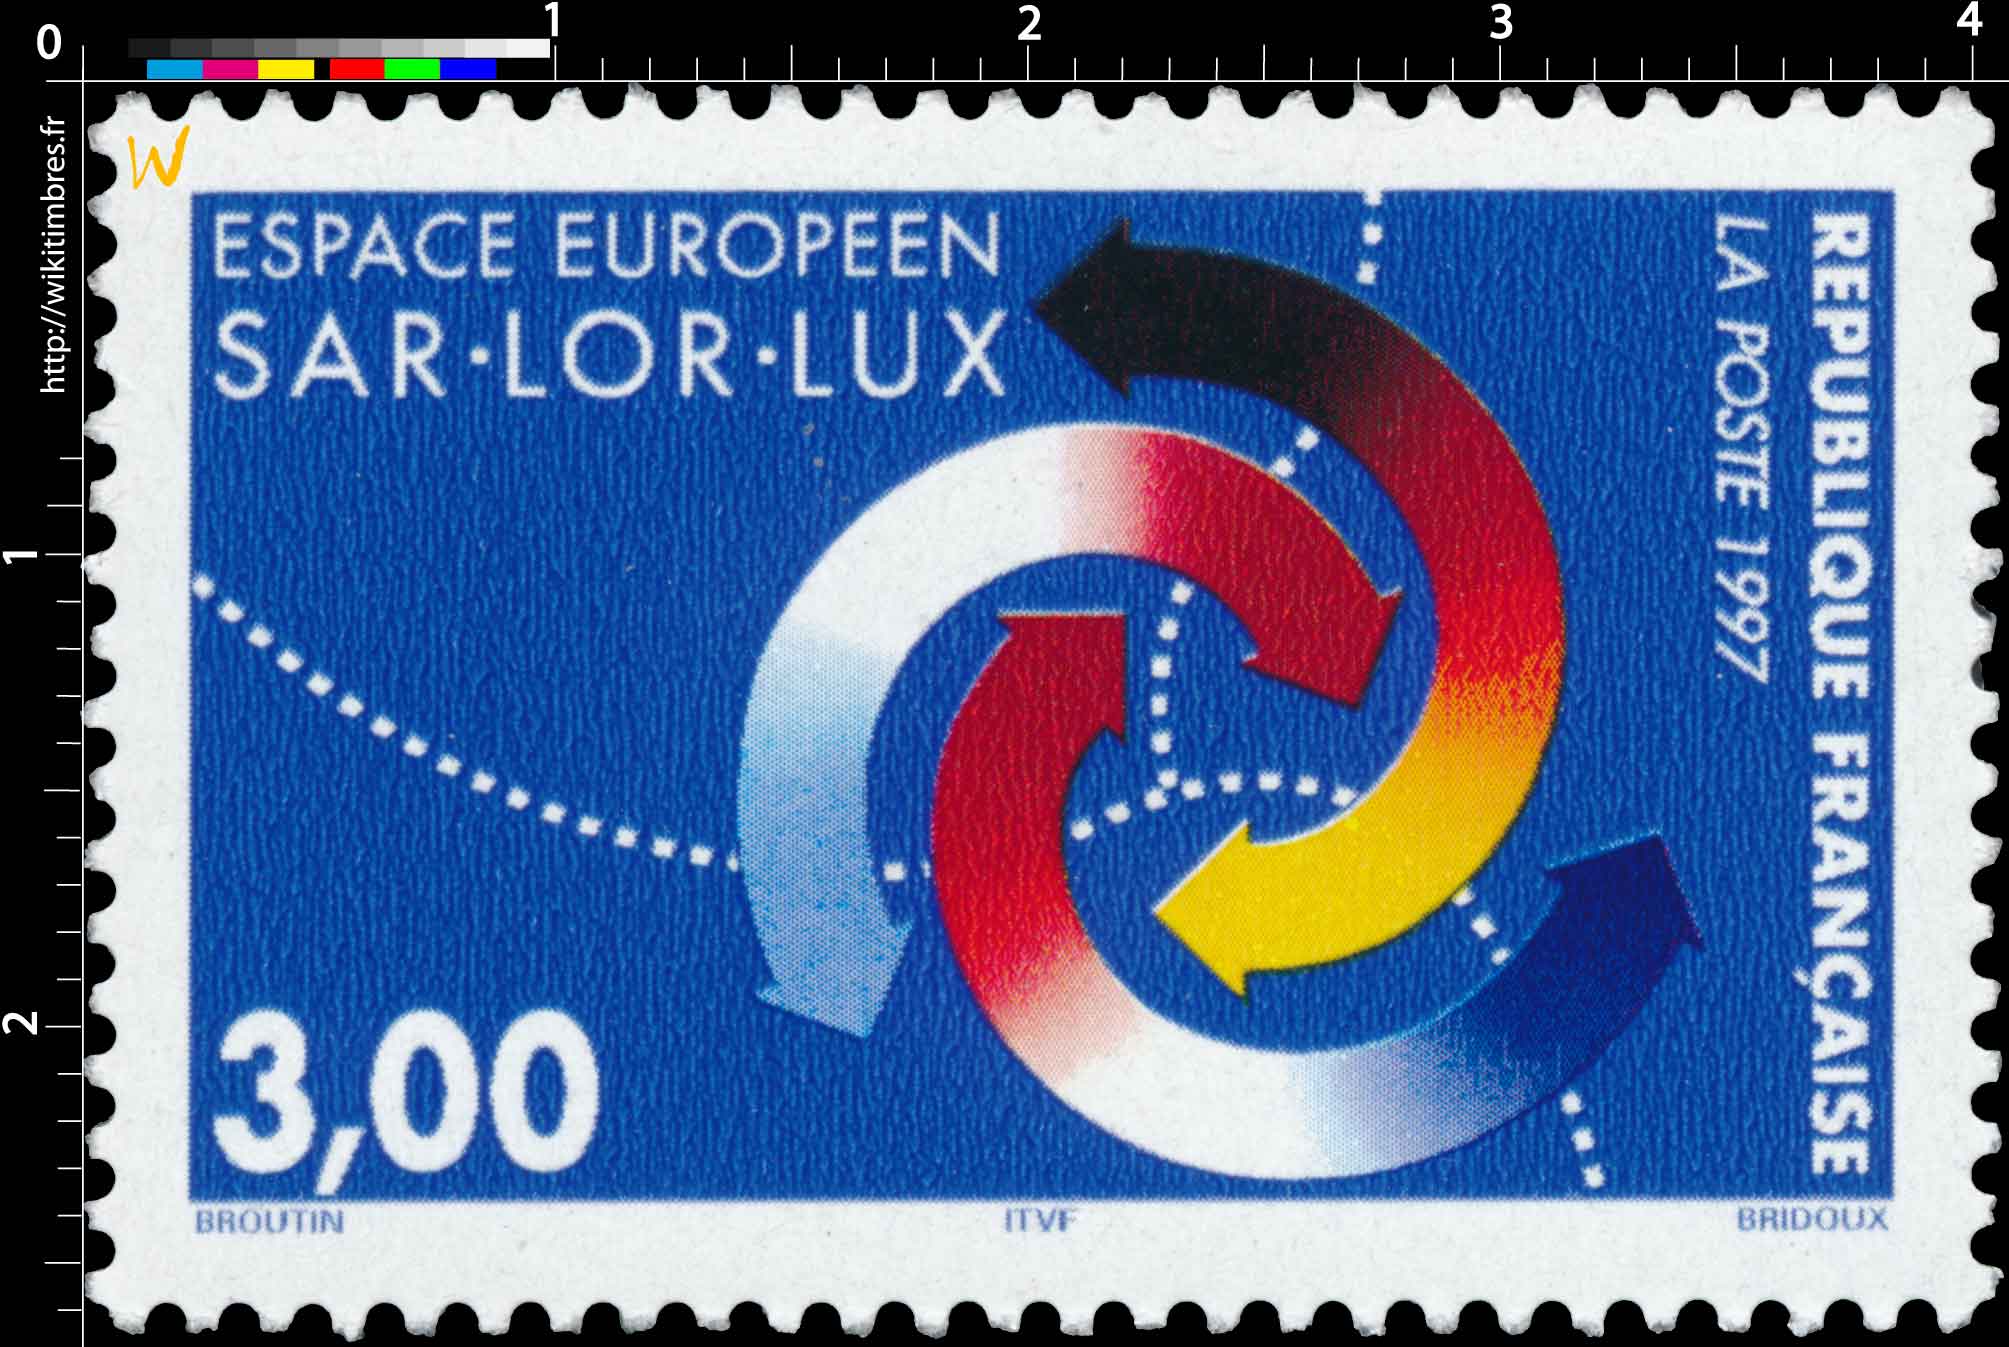 1997 ESPACE EUROPÉEN SAR.LOR.LUX